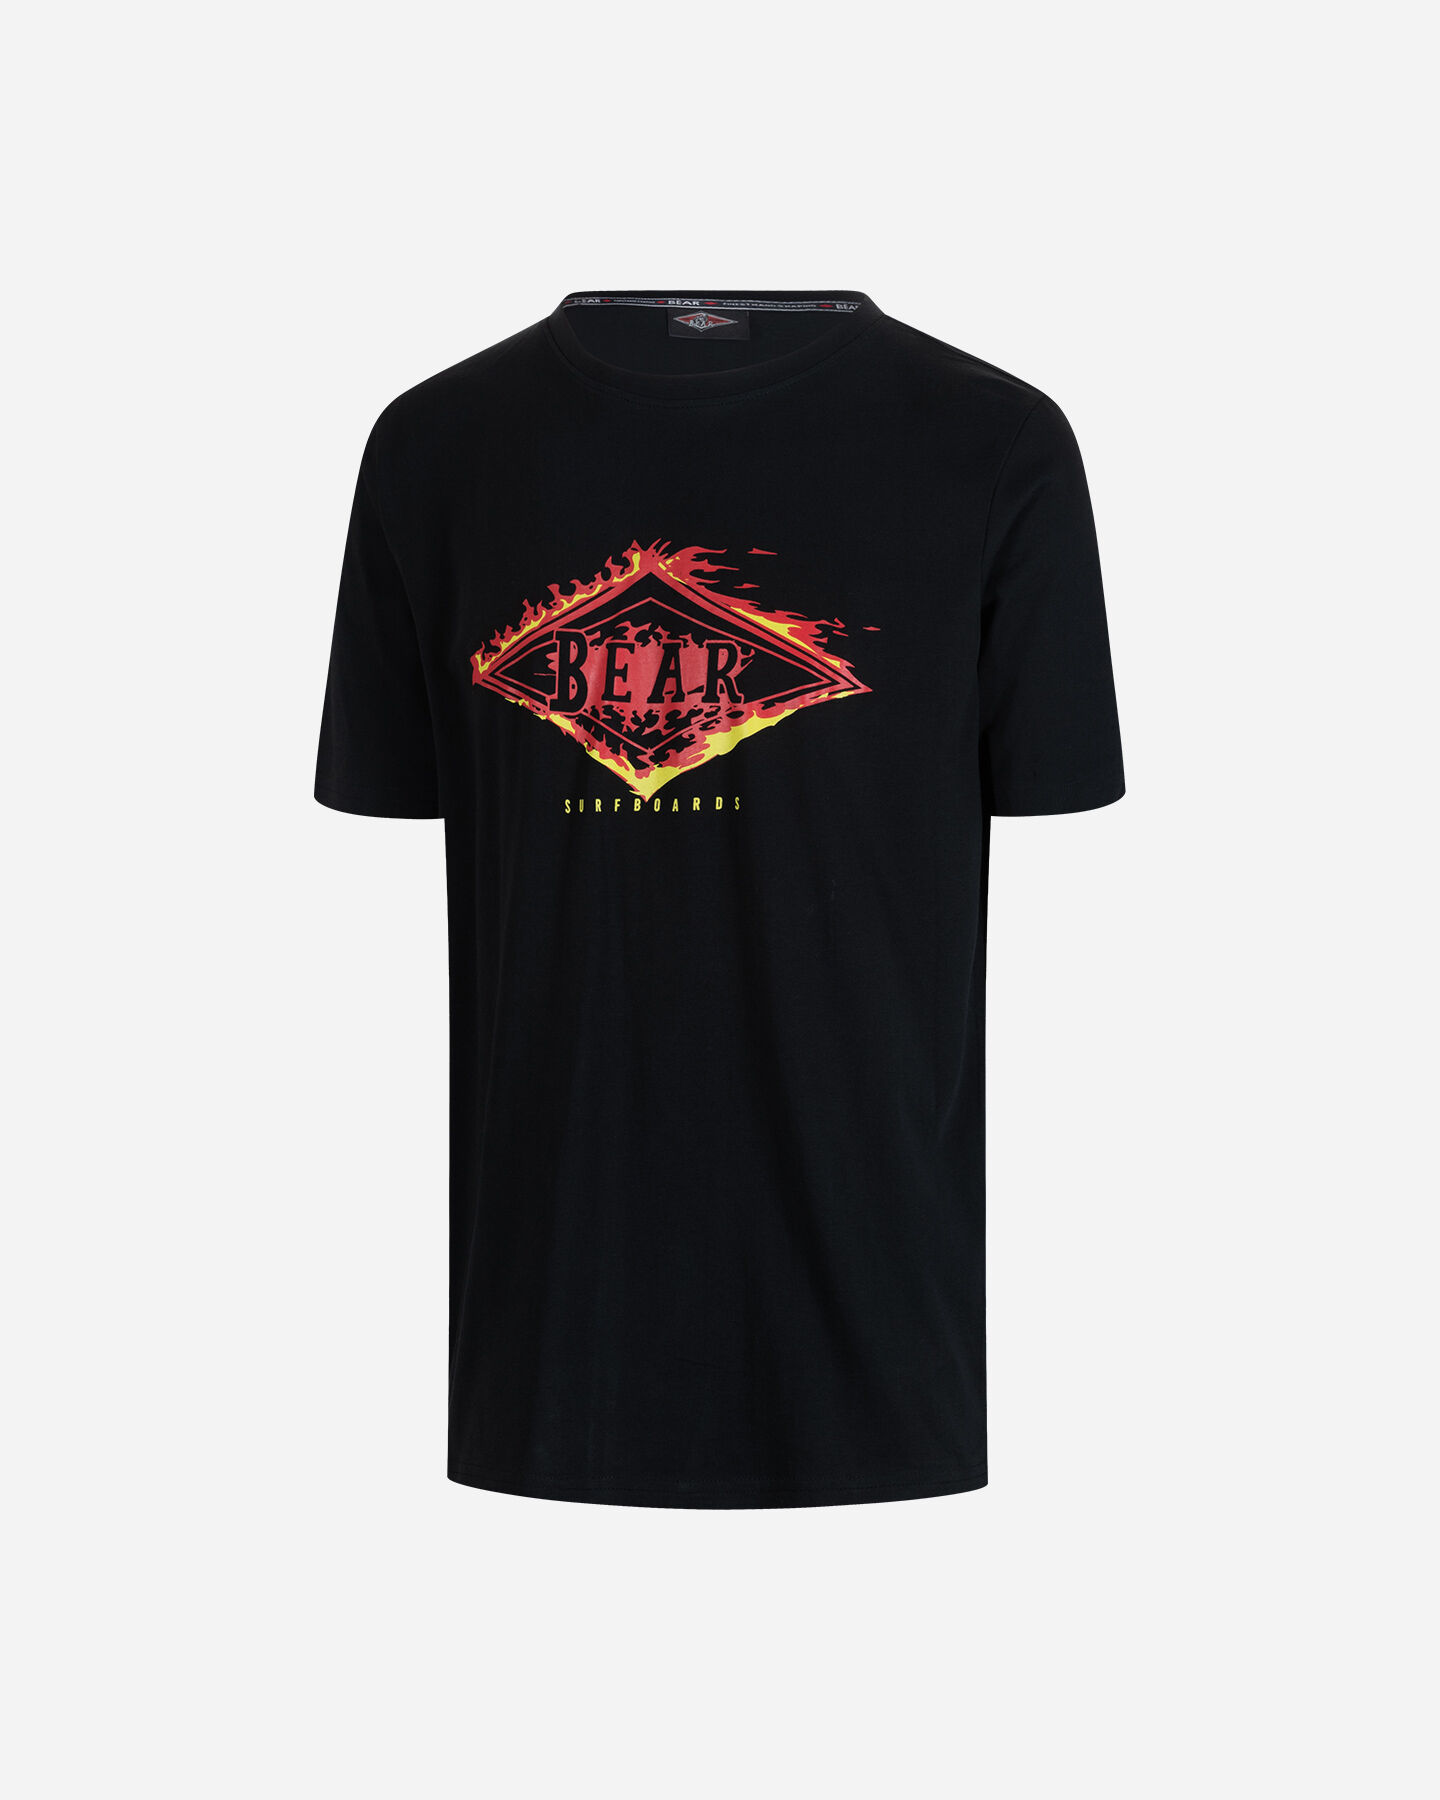  T-Shirt BEAR STREETWEAR URBAN STYLE M S4126731|050|XXL scatto 0